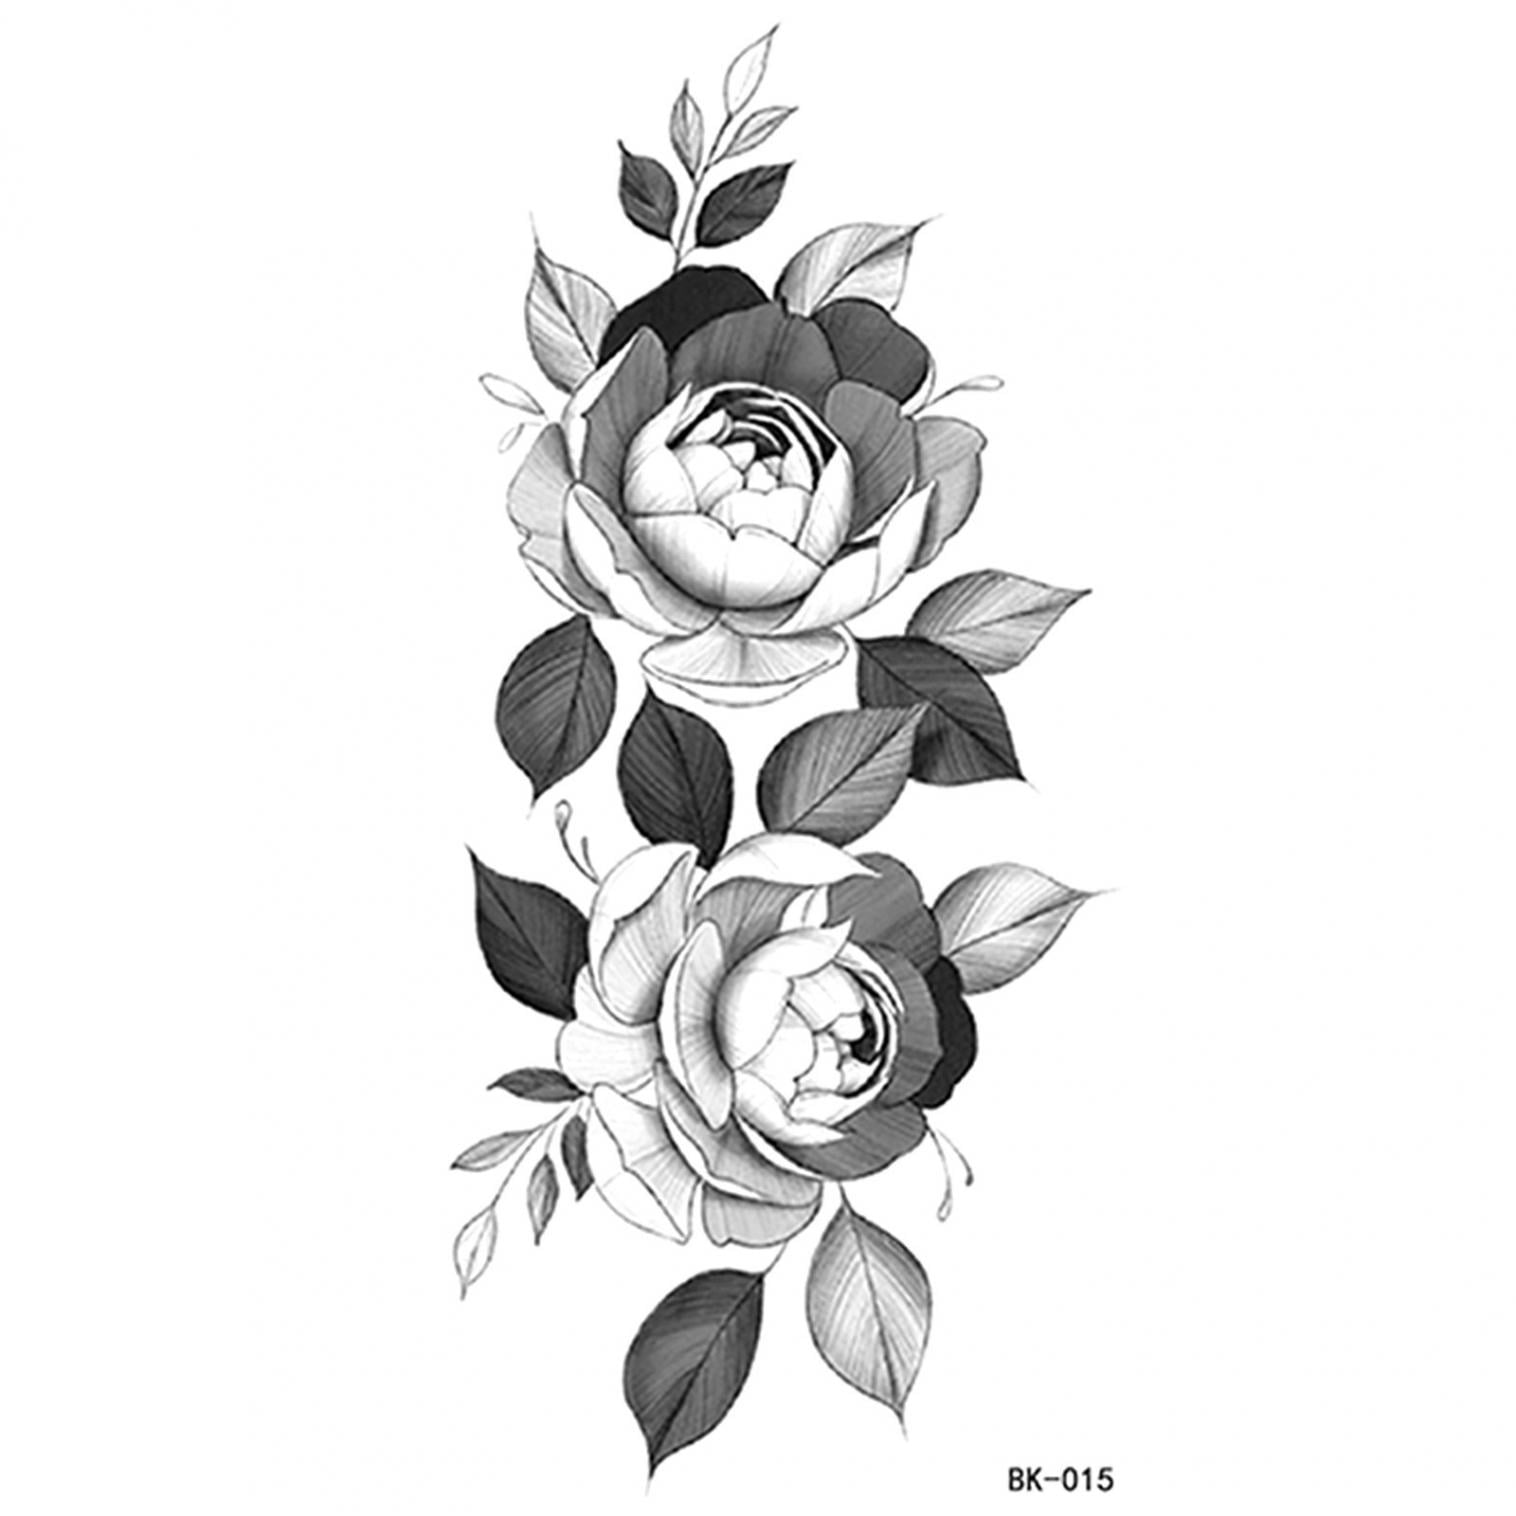 Black rose with strings tattoo idea | TattoosAI